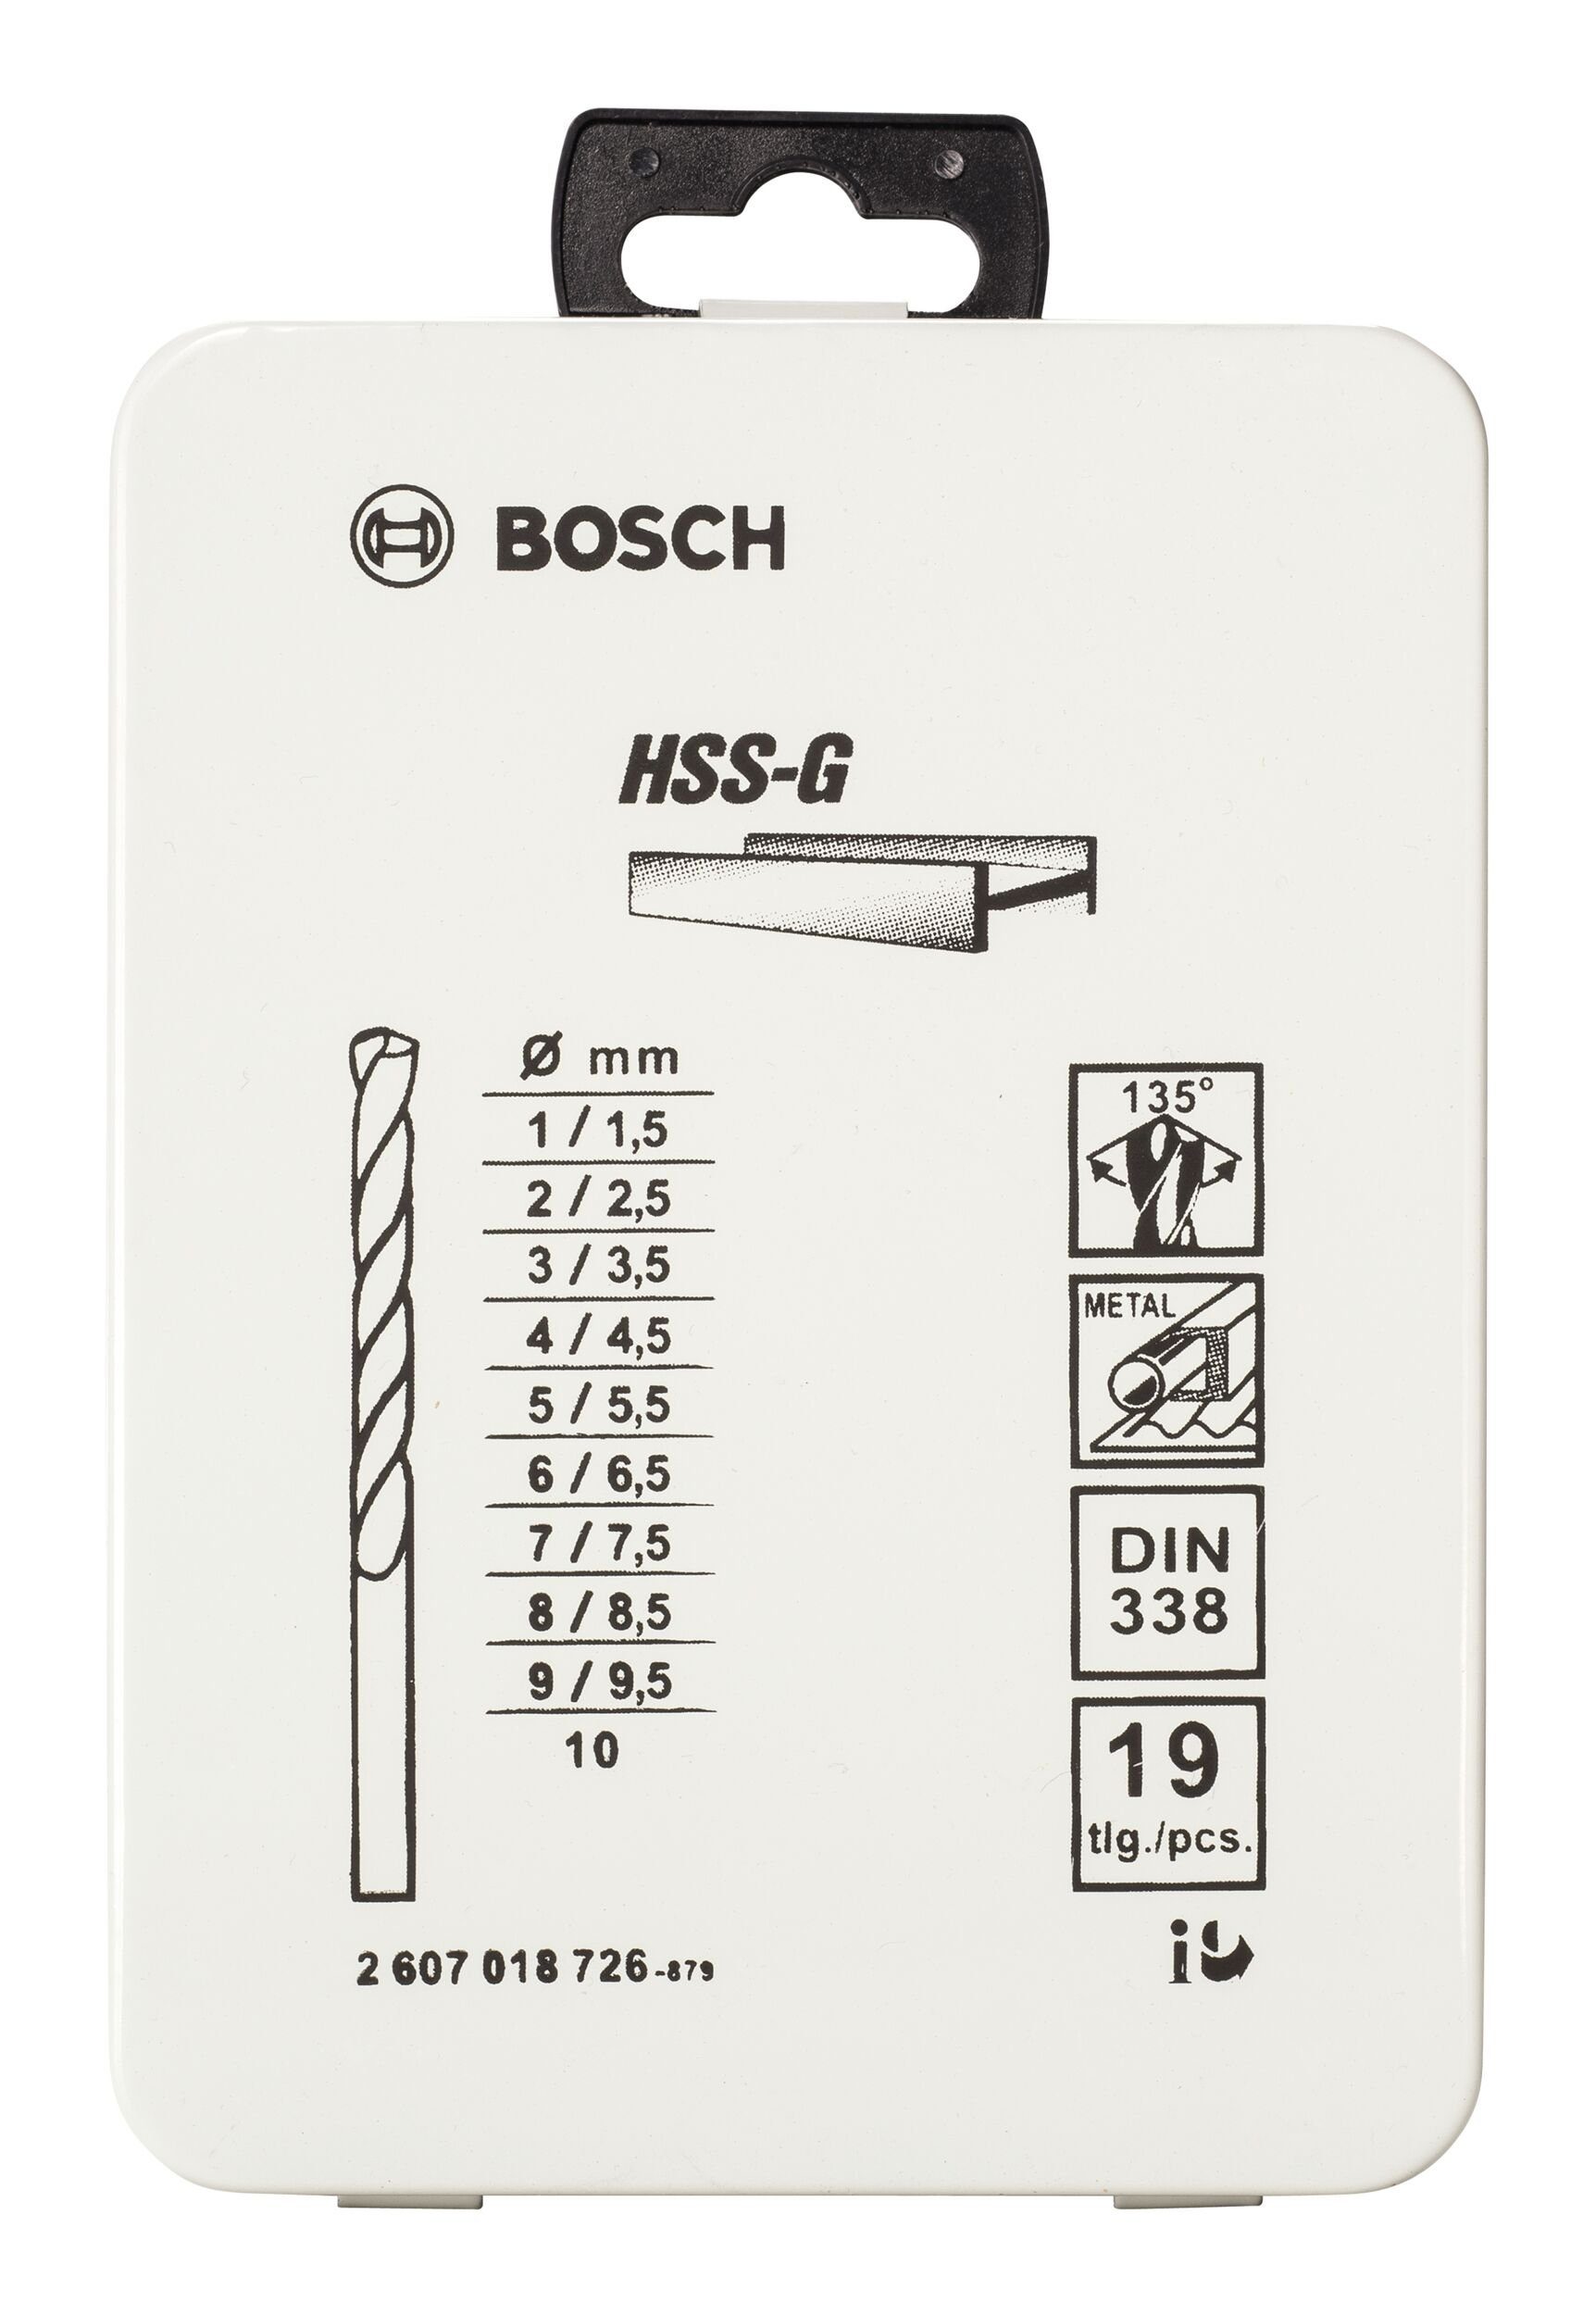 - 1 Metallkassette in 10 mm 19-teilig Set Metallbohrer, HSS-G BOSCH - 135° -